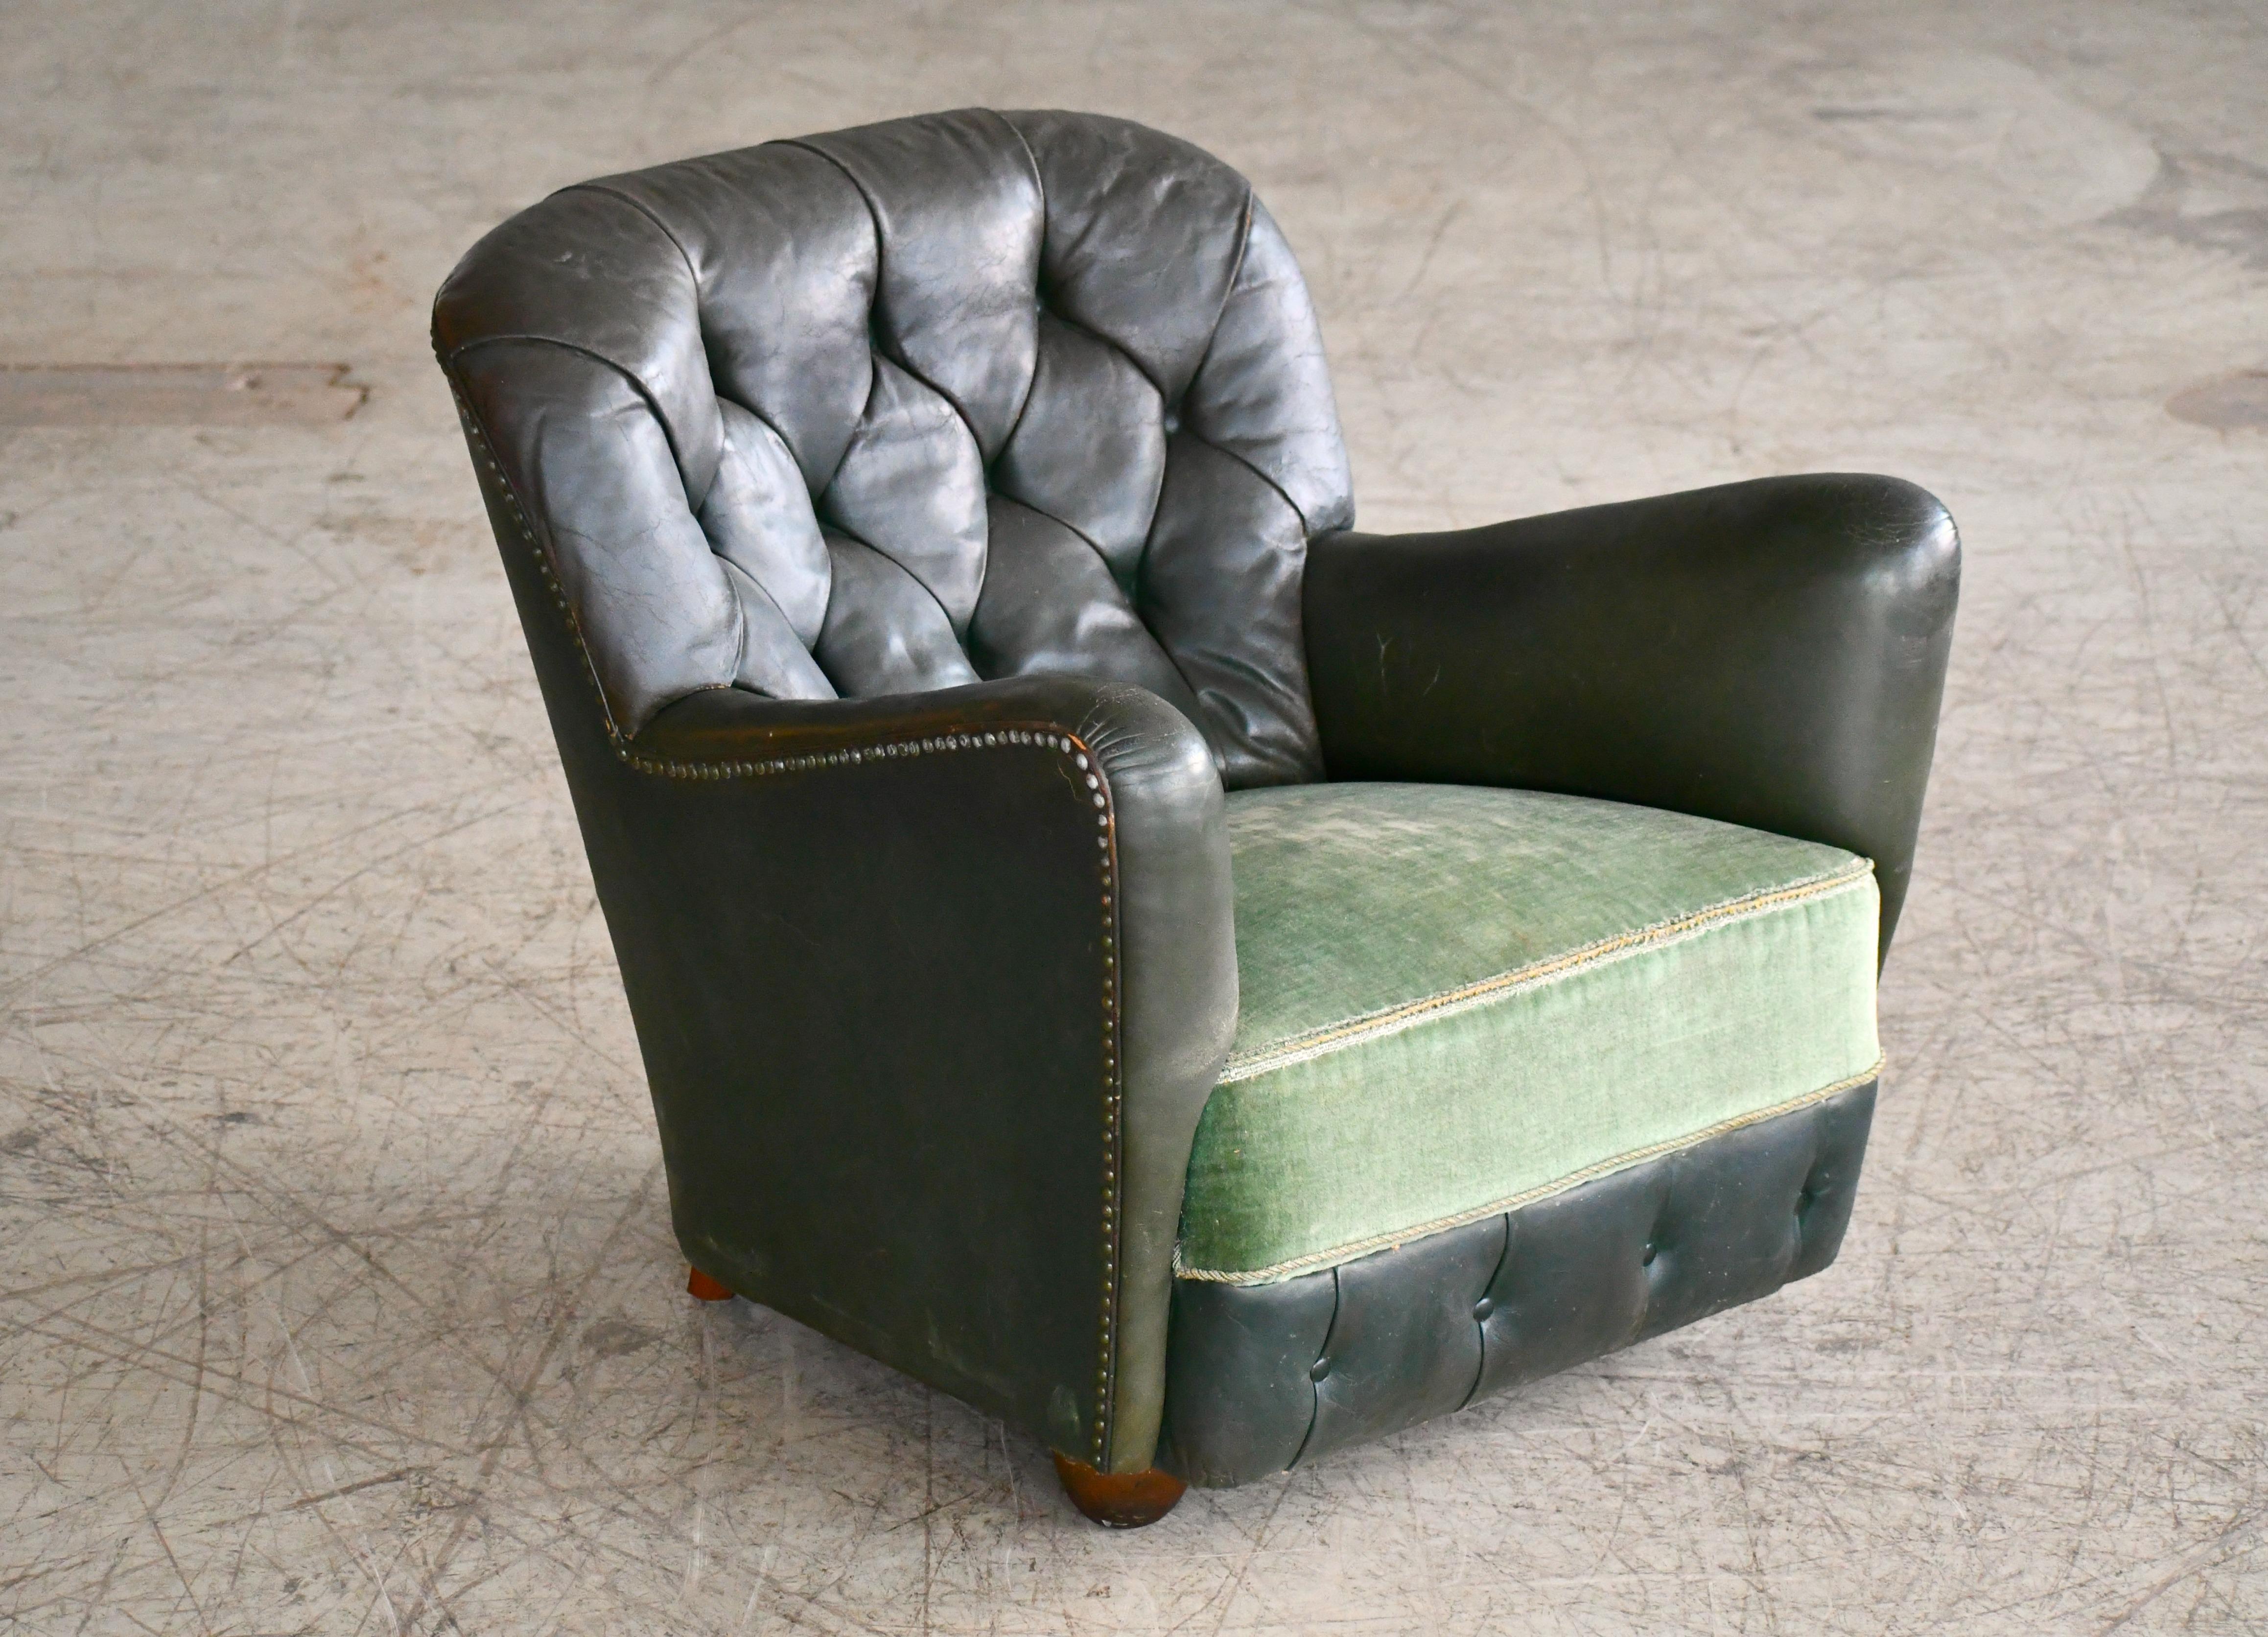 dark green leather chair